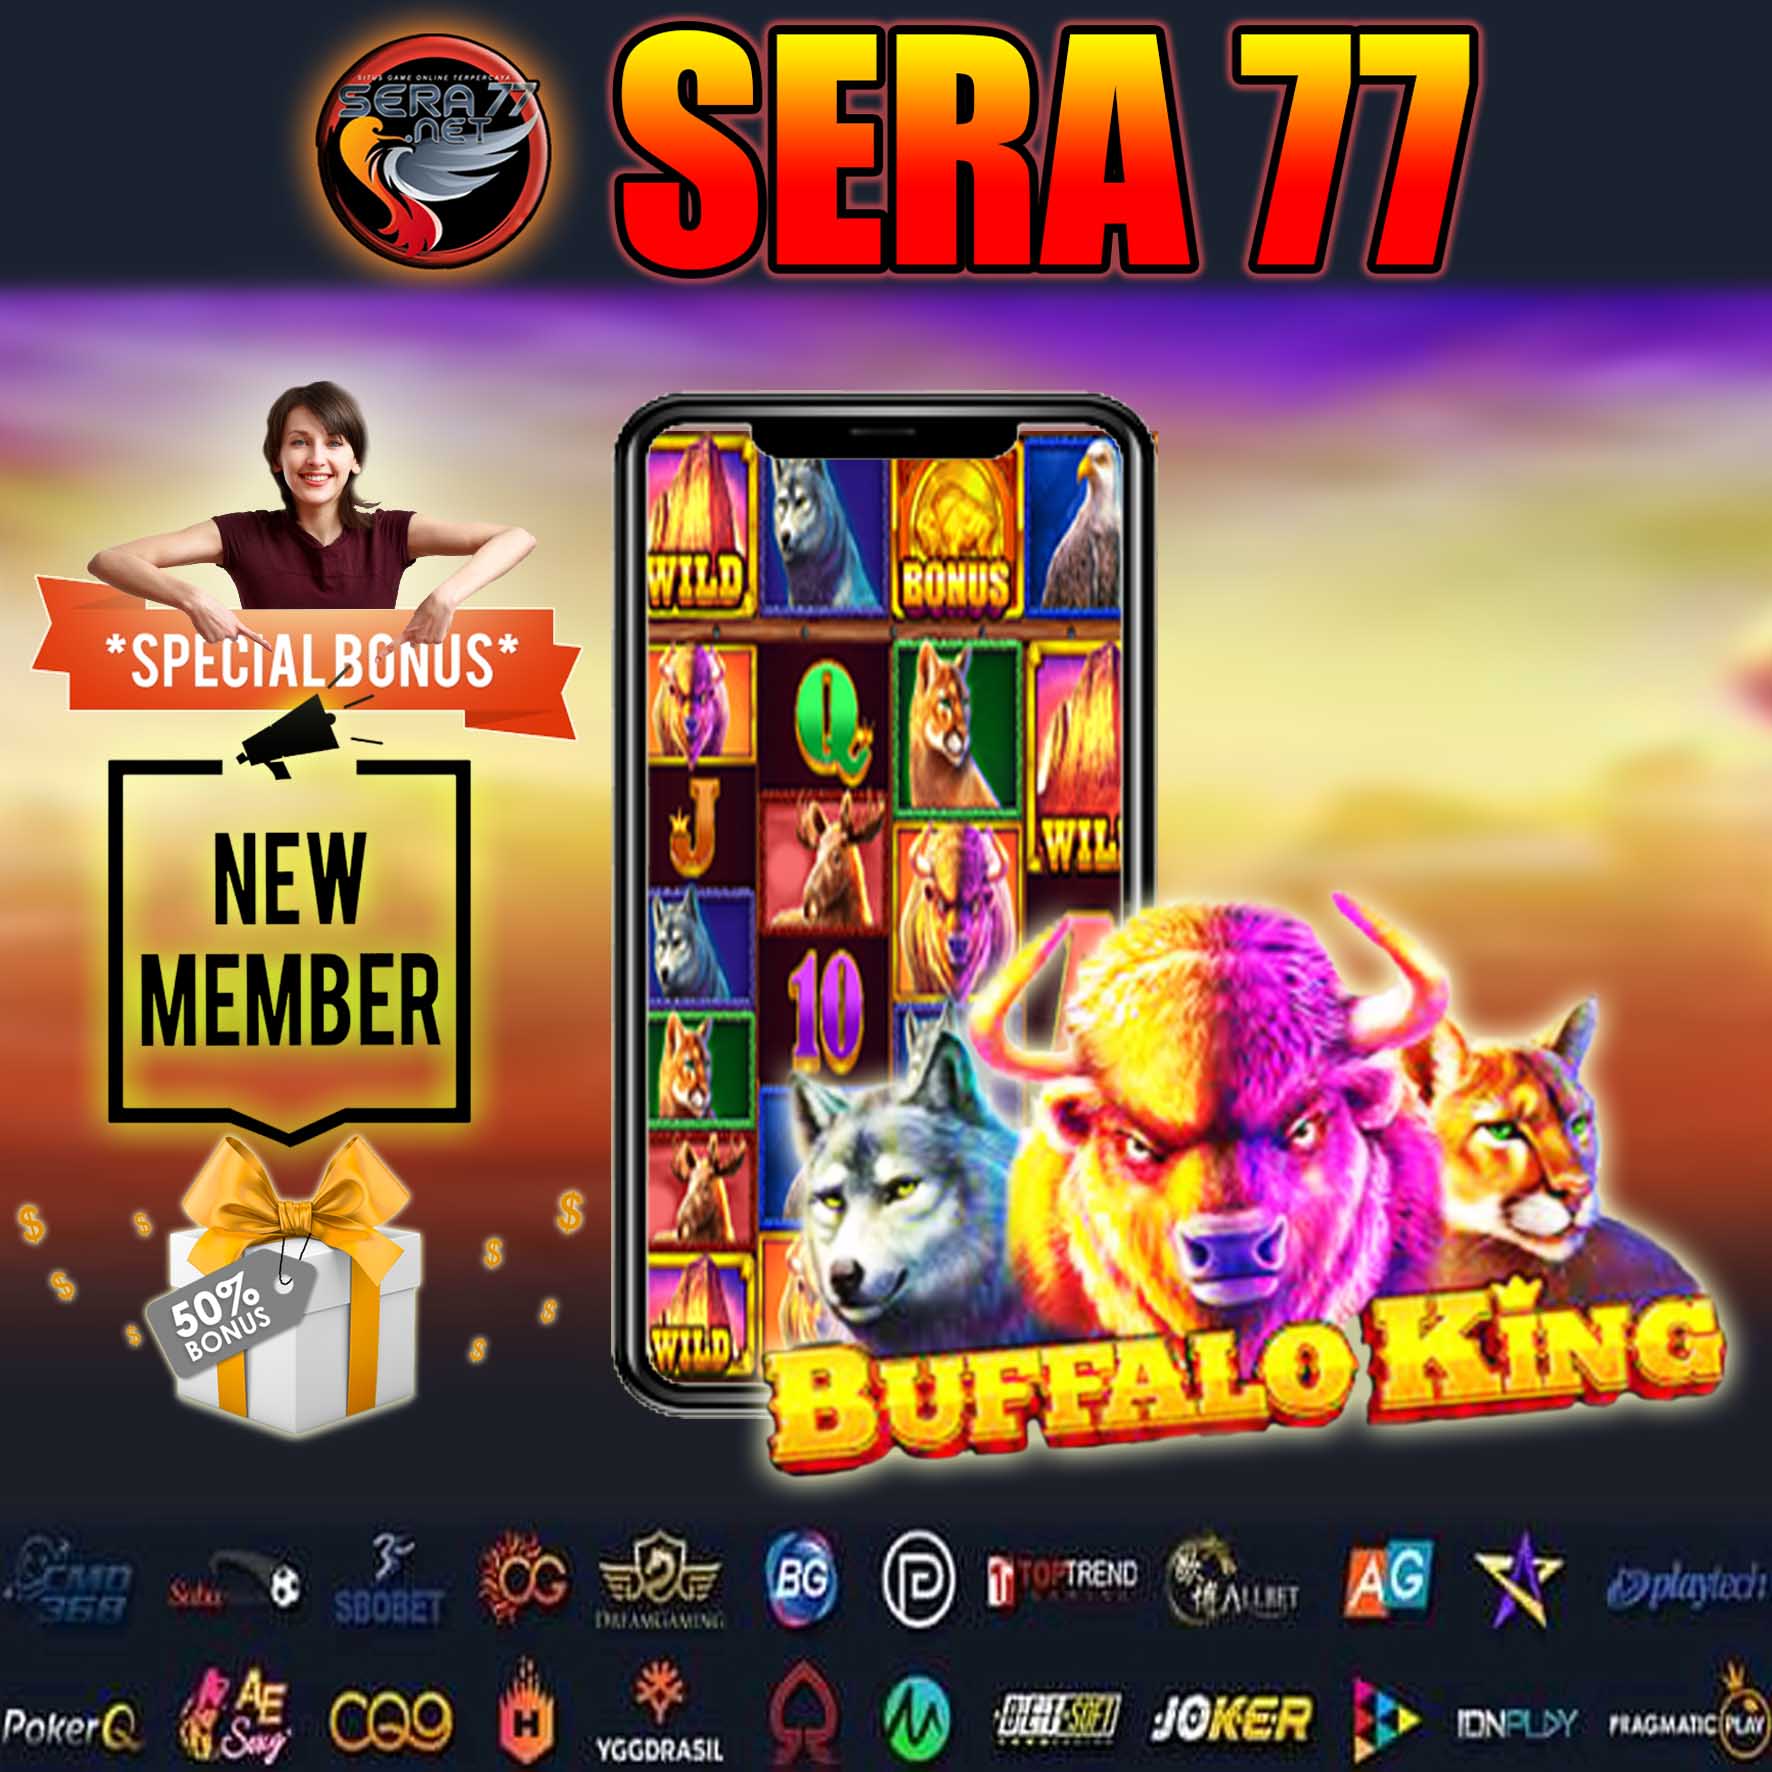 Sera77 bufallo king